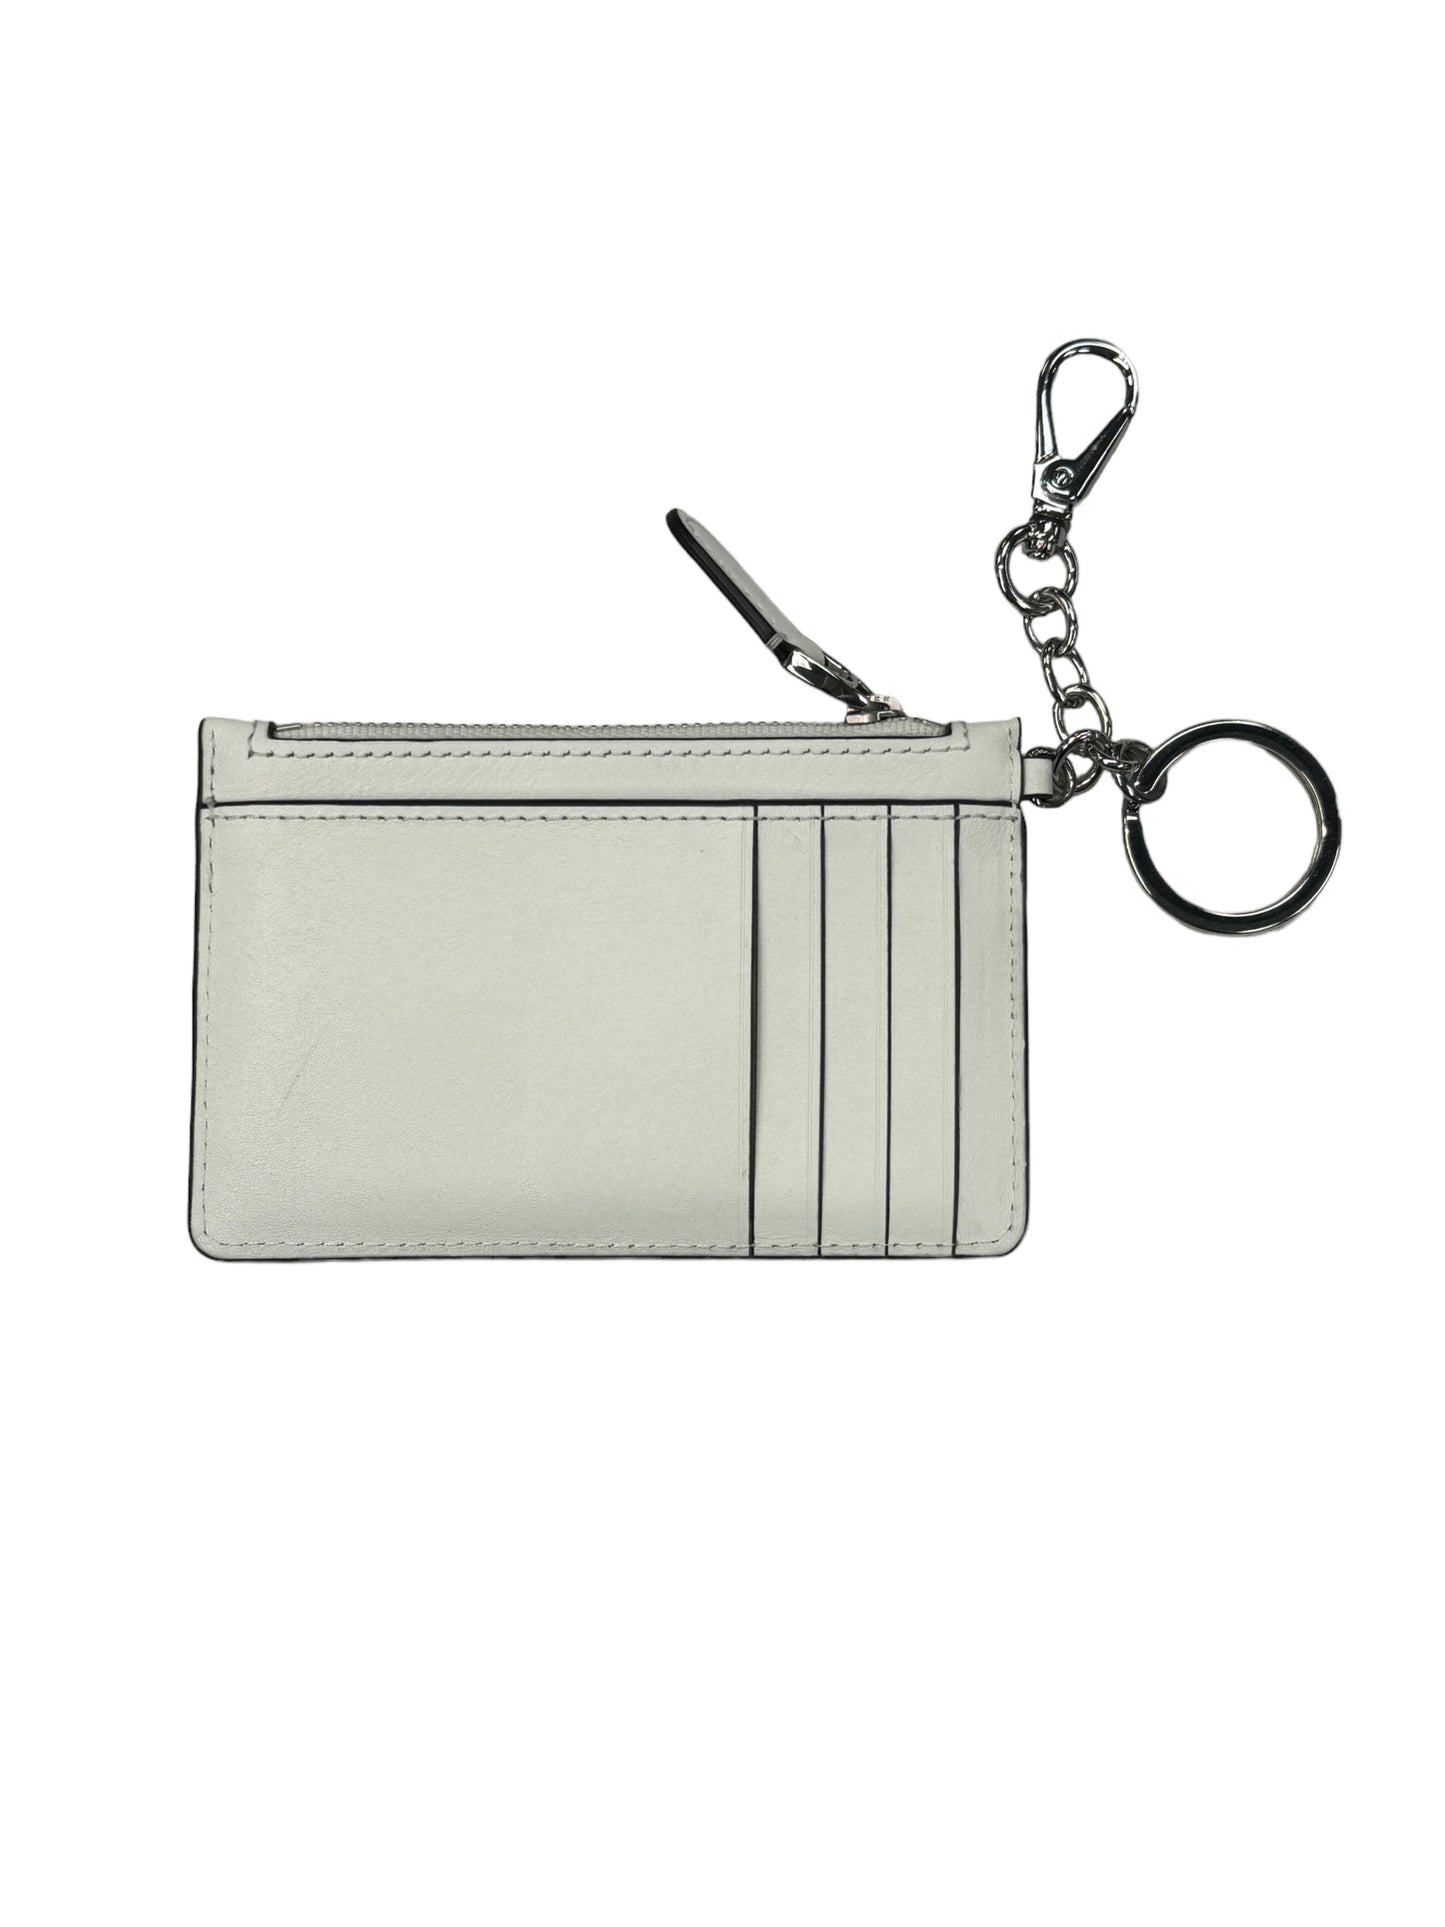 Wallet By Lauren By Ralph Lauren  Size: Small